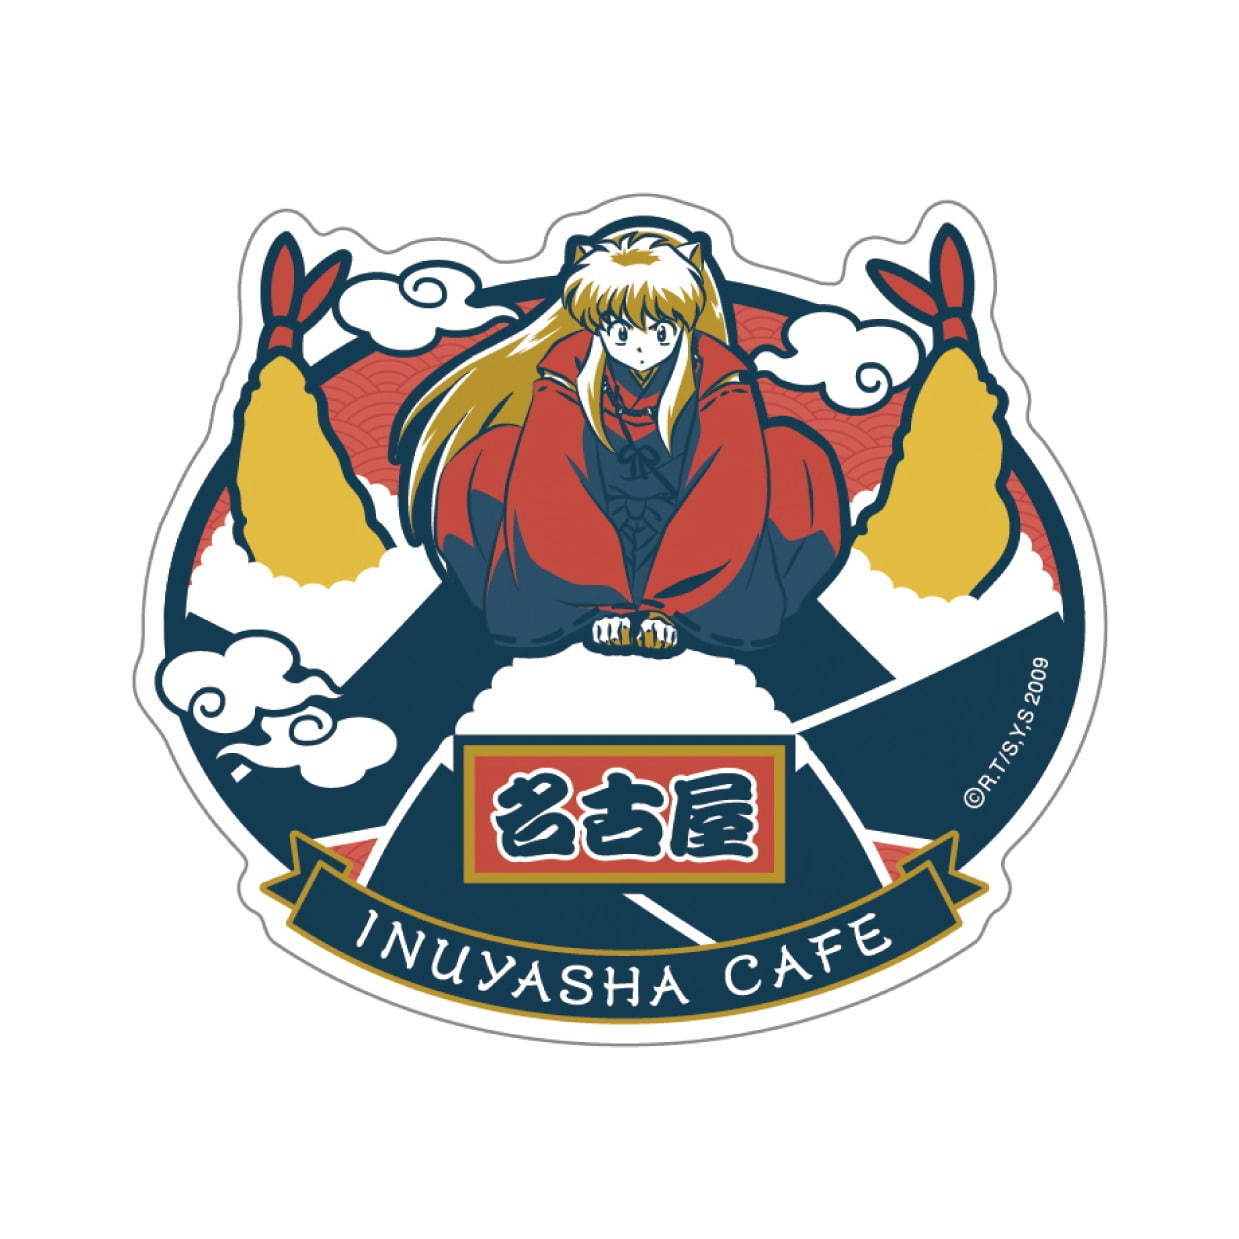 Inuyasha Cafe in Japan 2020